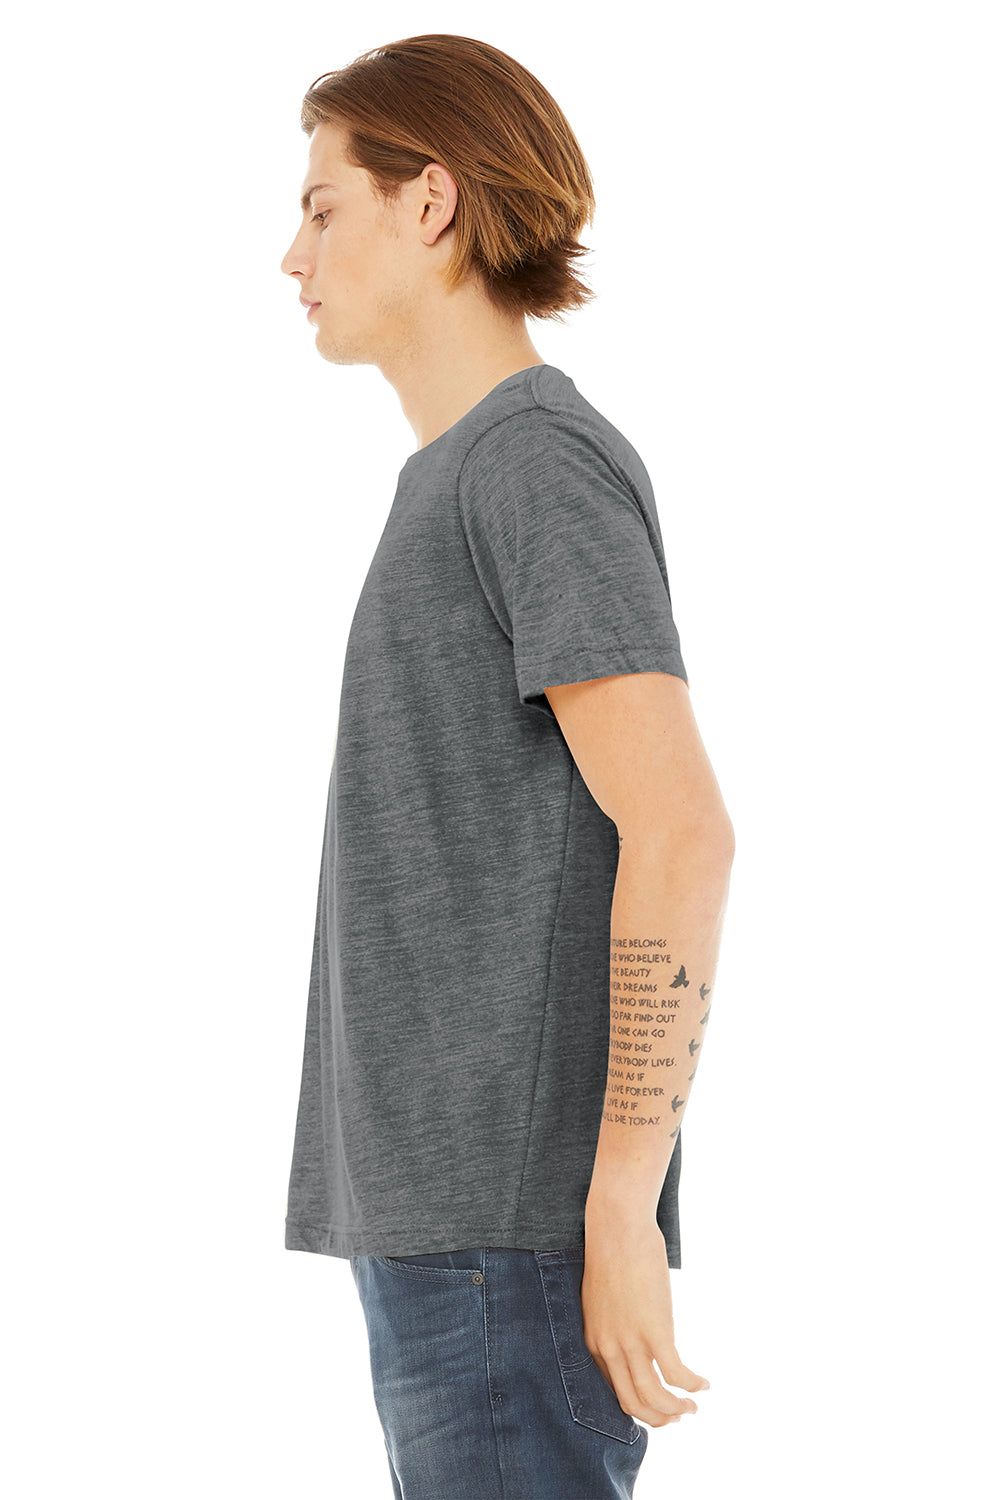 Bella + Canvas BC3650/3650 Mens Short Sleeve Crewneck T-Shirt Asphalt Grey Slub Model Side